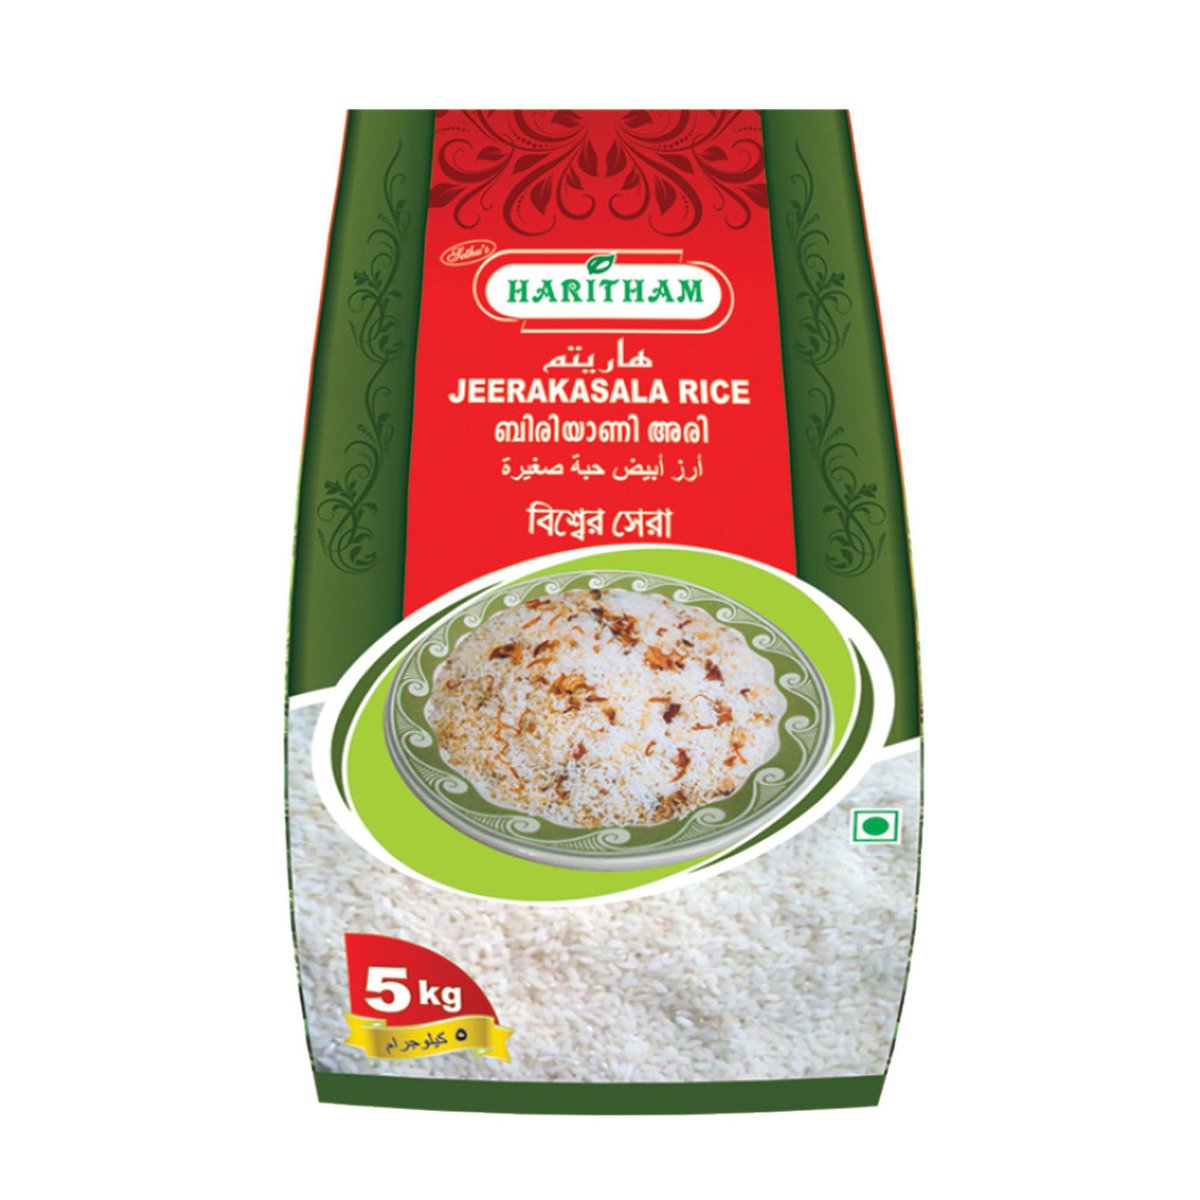 Haritham Jeerakasala Rice 5kg